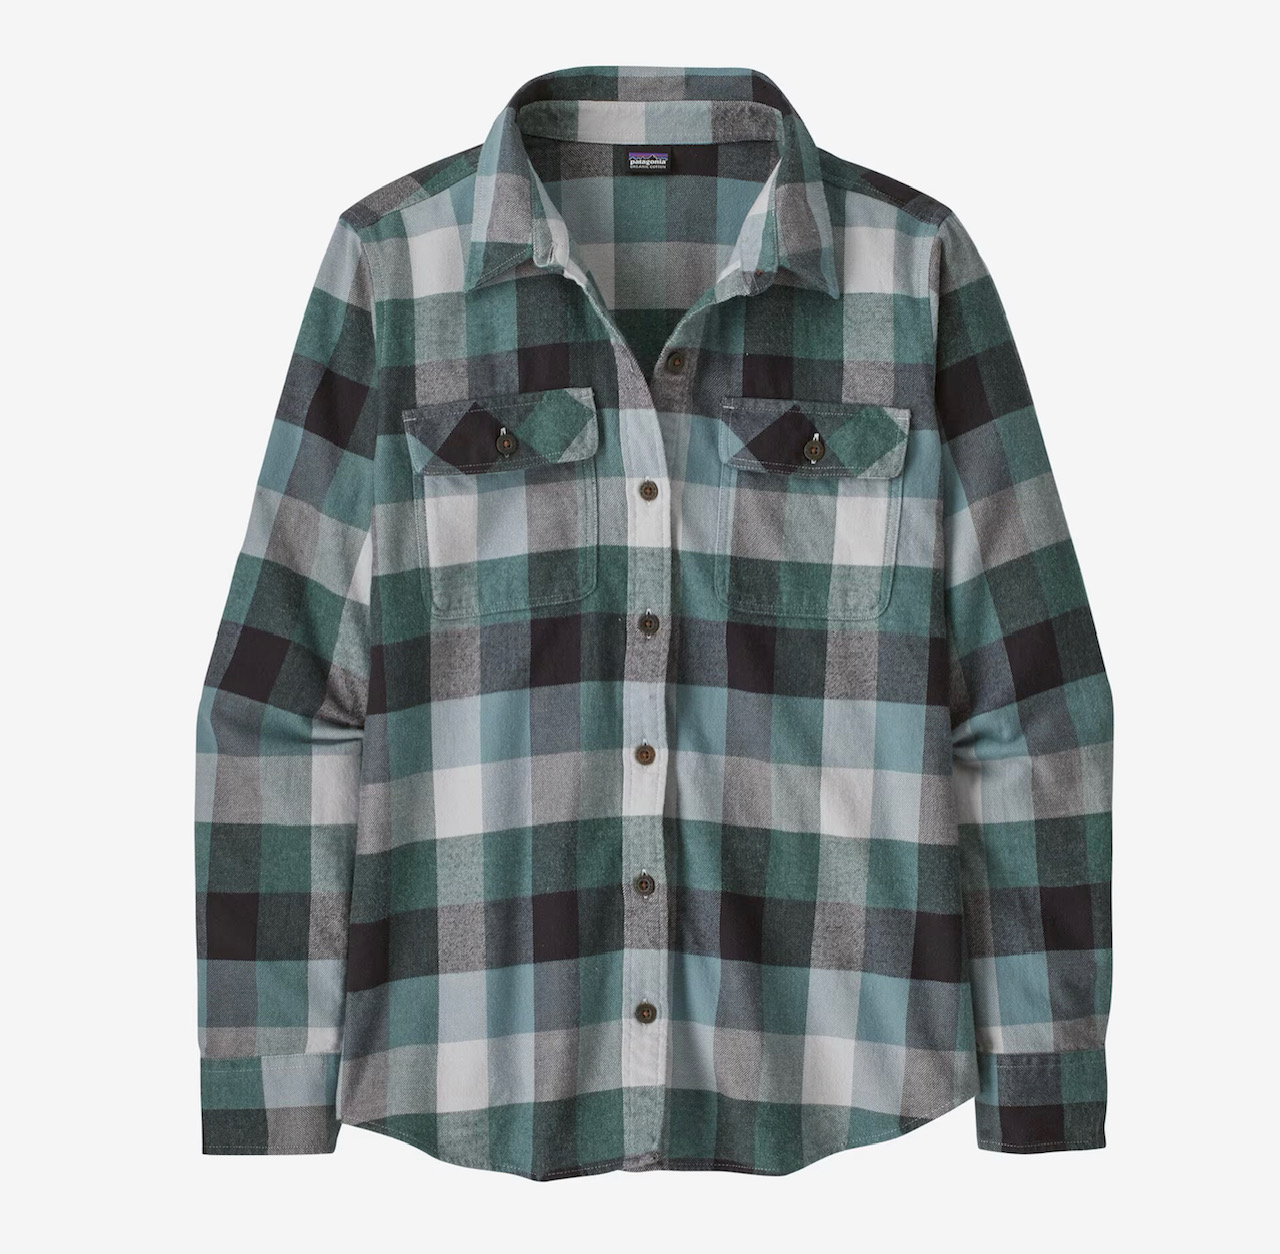 Patagonia W's L/S Organic Cotton MW Fjord Flannel Shirt - Guides: Nouveau Green - Medium